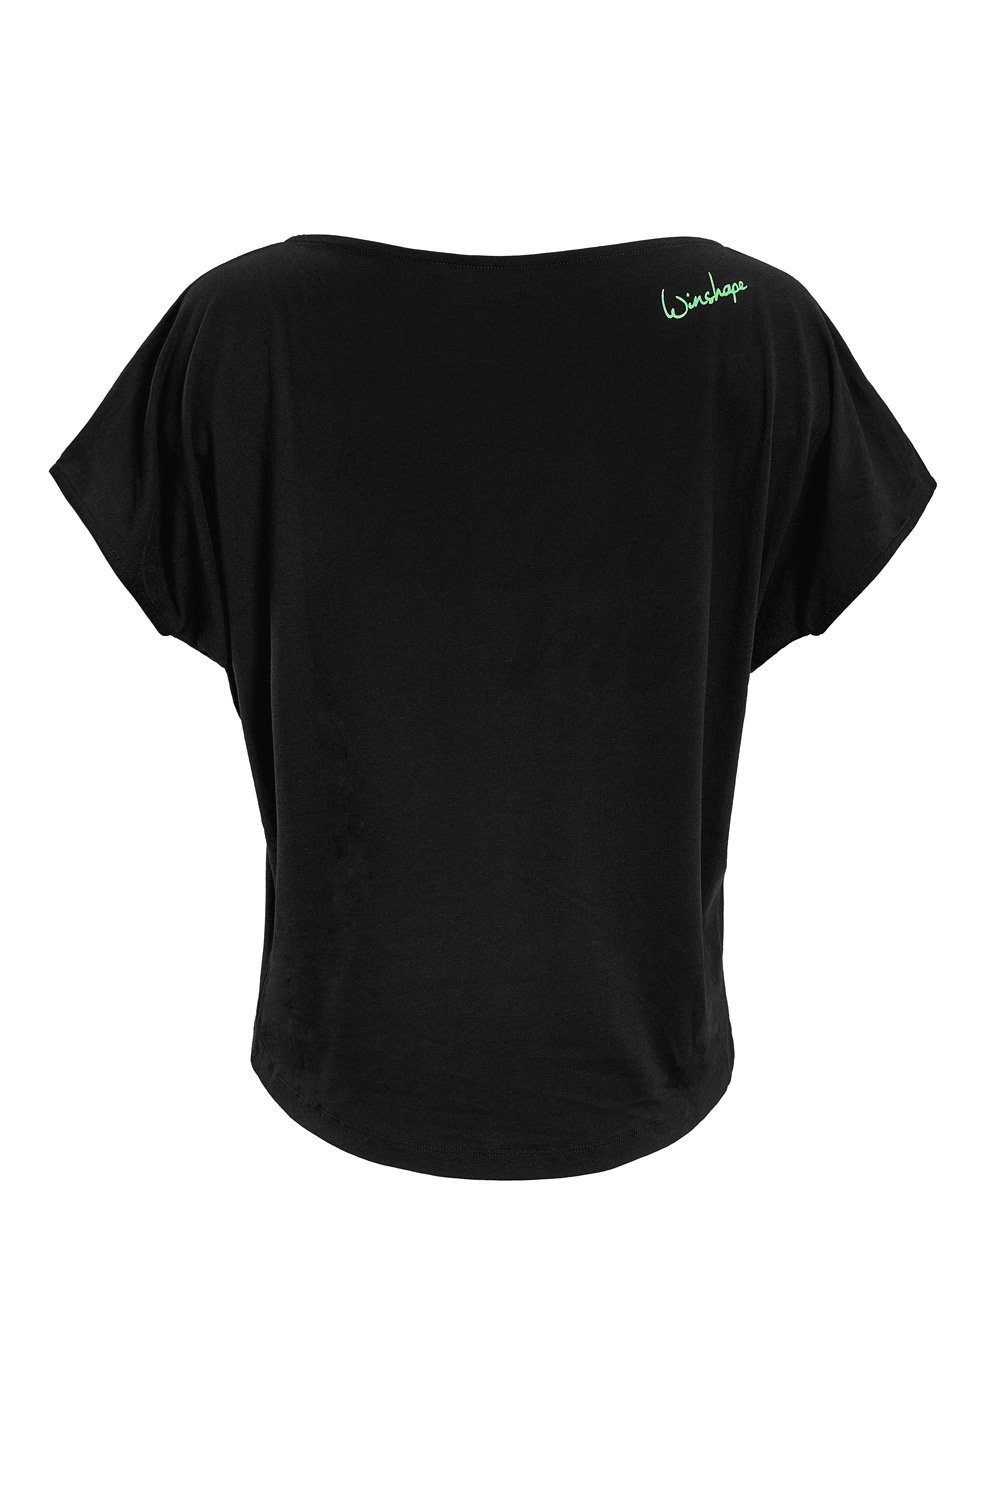 Winshape Oversize-Shirt MCT002 ultra leicht Neon grünem Glitzer-Aufdruck mit